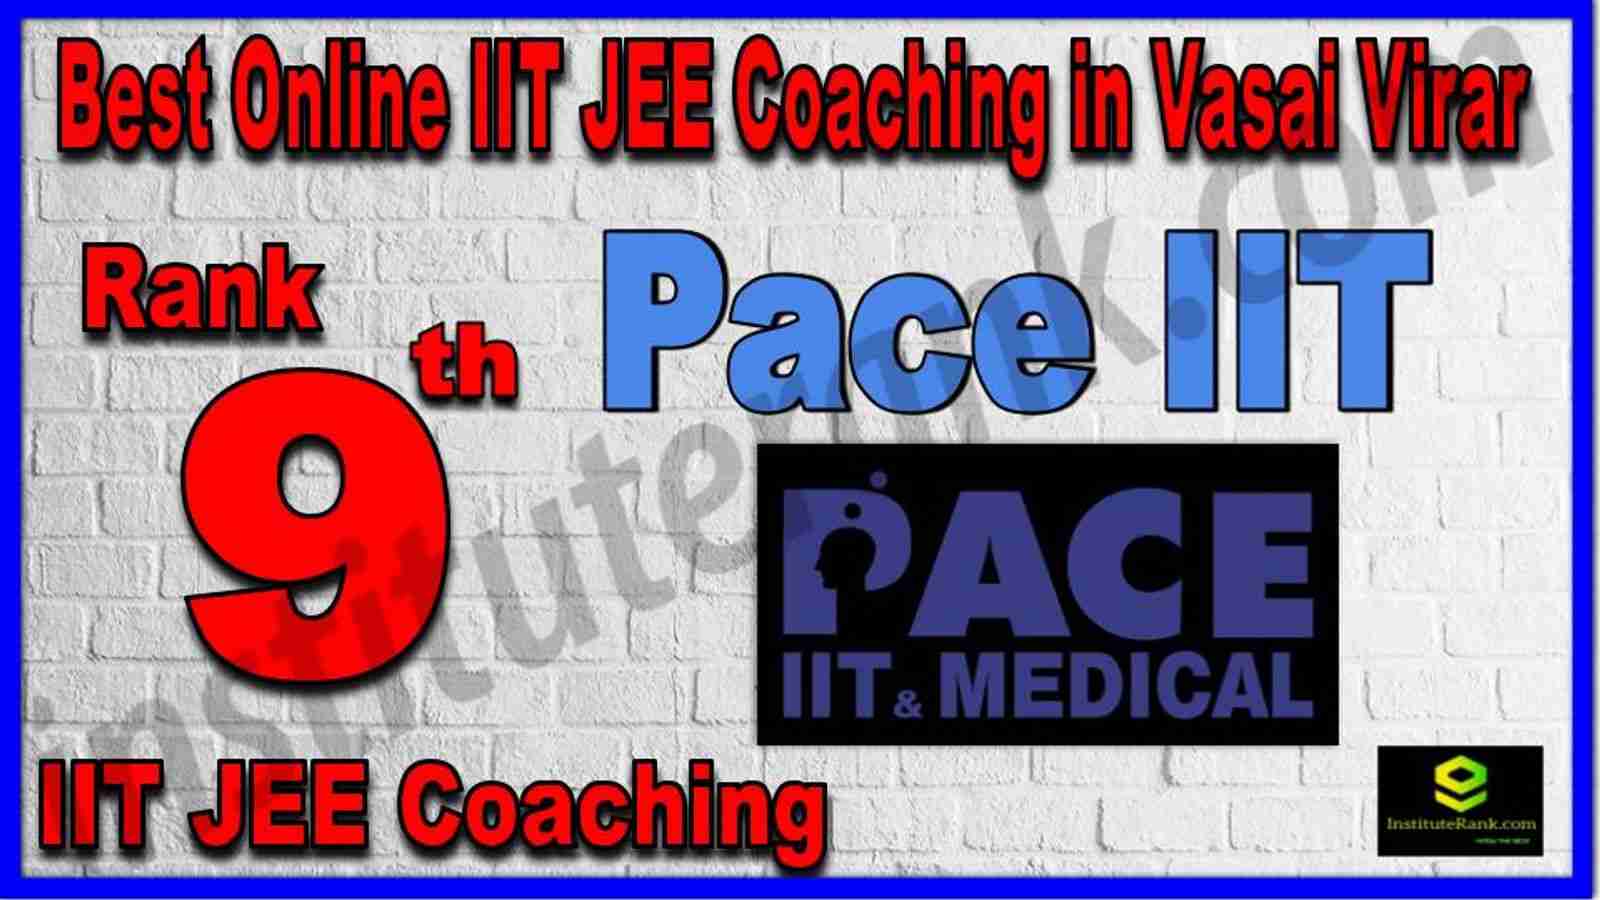 Rank 9th Best Online IIT JEE Coaching in Vasai Virar